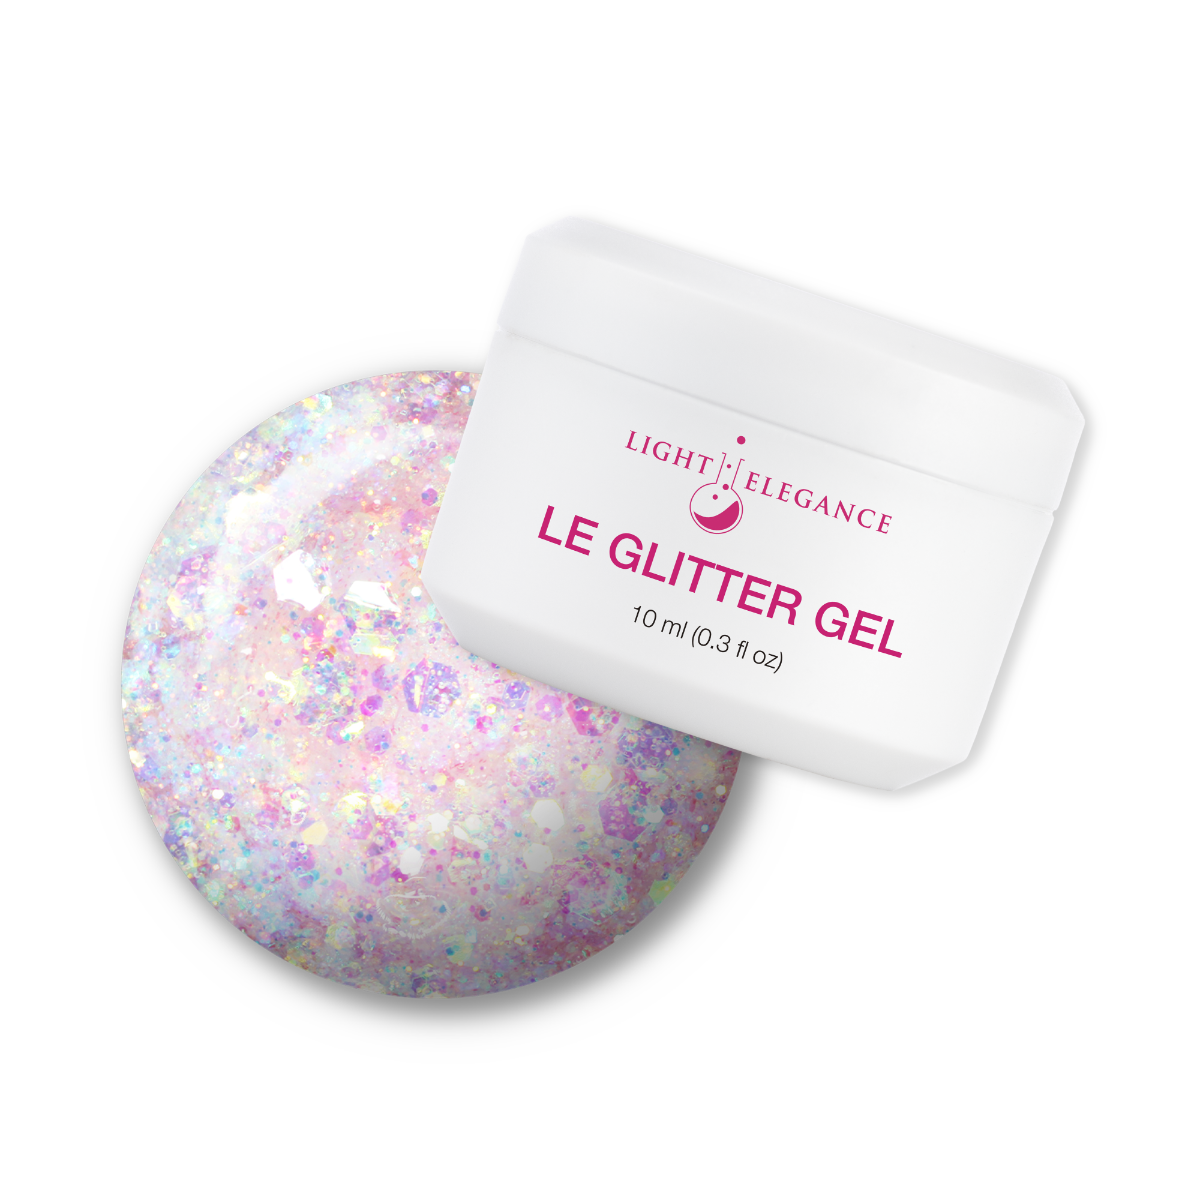 Fairy Good! Glitter Gel 10 ml